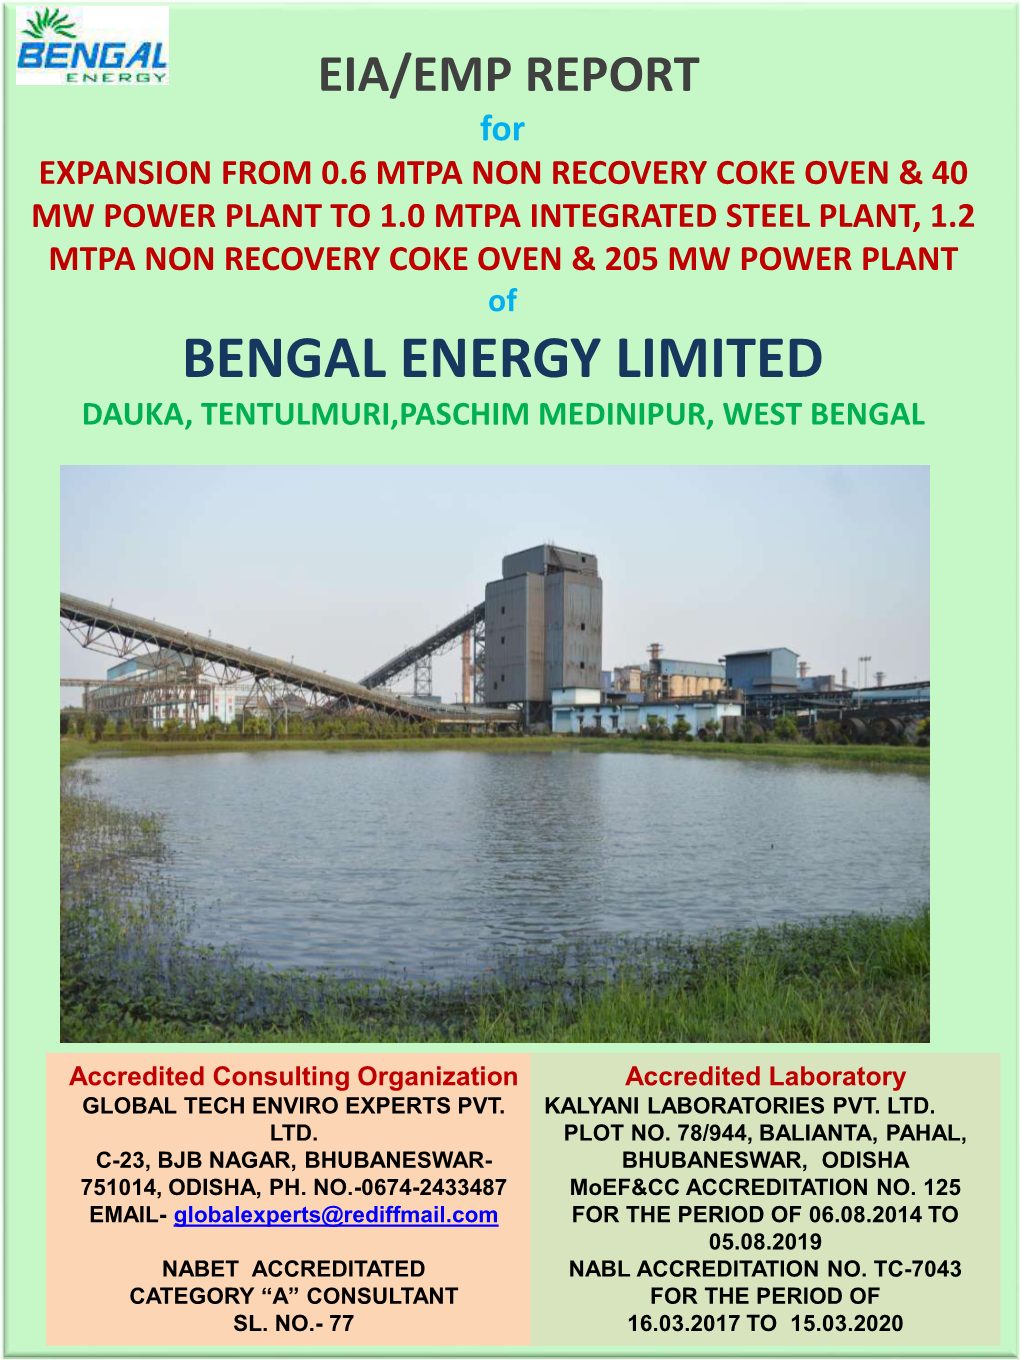 Bengal Energy Limited Dauka, Tentulmuri,Paschim Medinipur, West Bengal